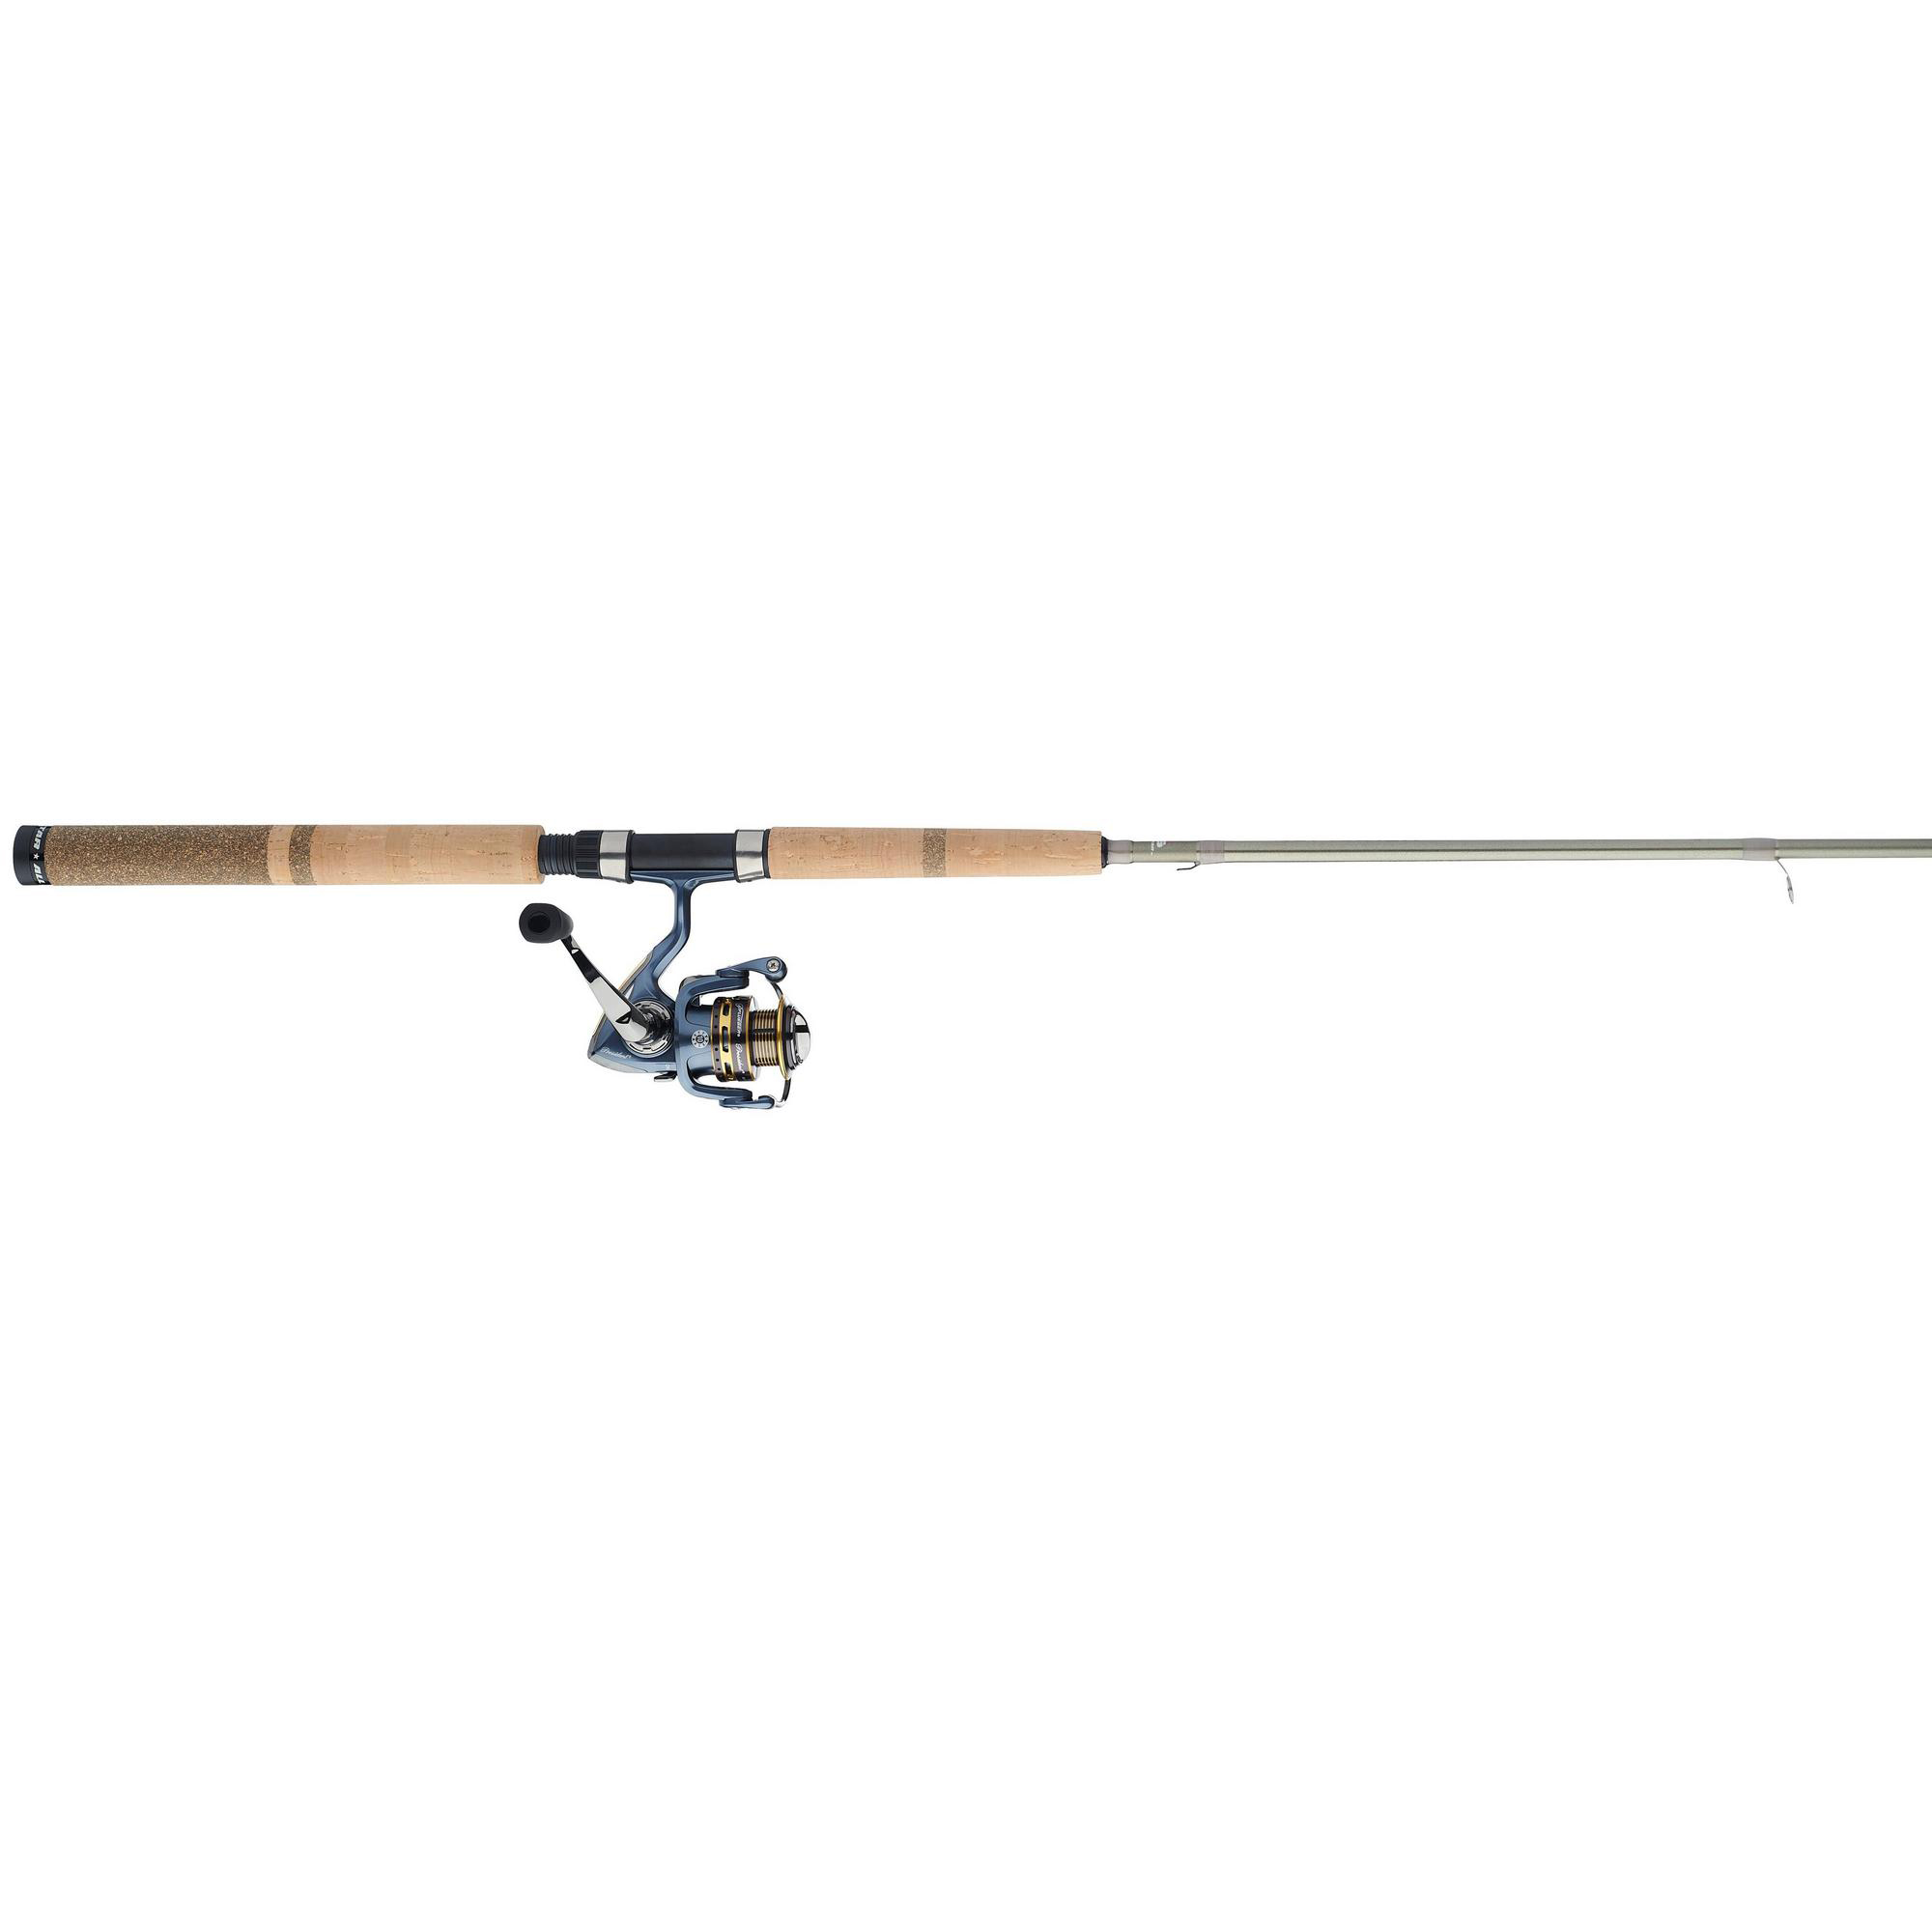  Abu Garcia Blue Max Low Profile Baitcast Reel and Fishing Rod  Combo, 7' : Sports & Outdoors